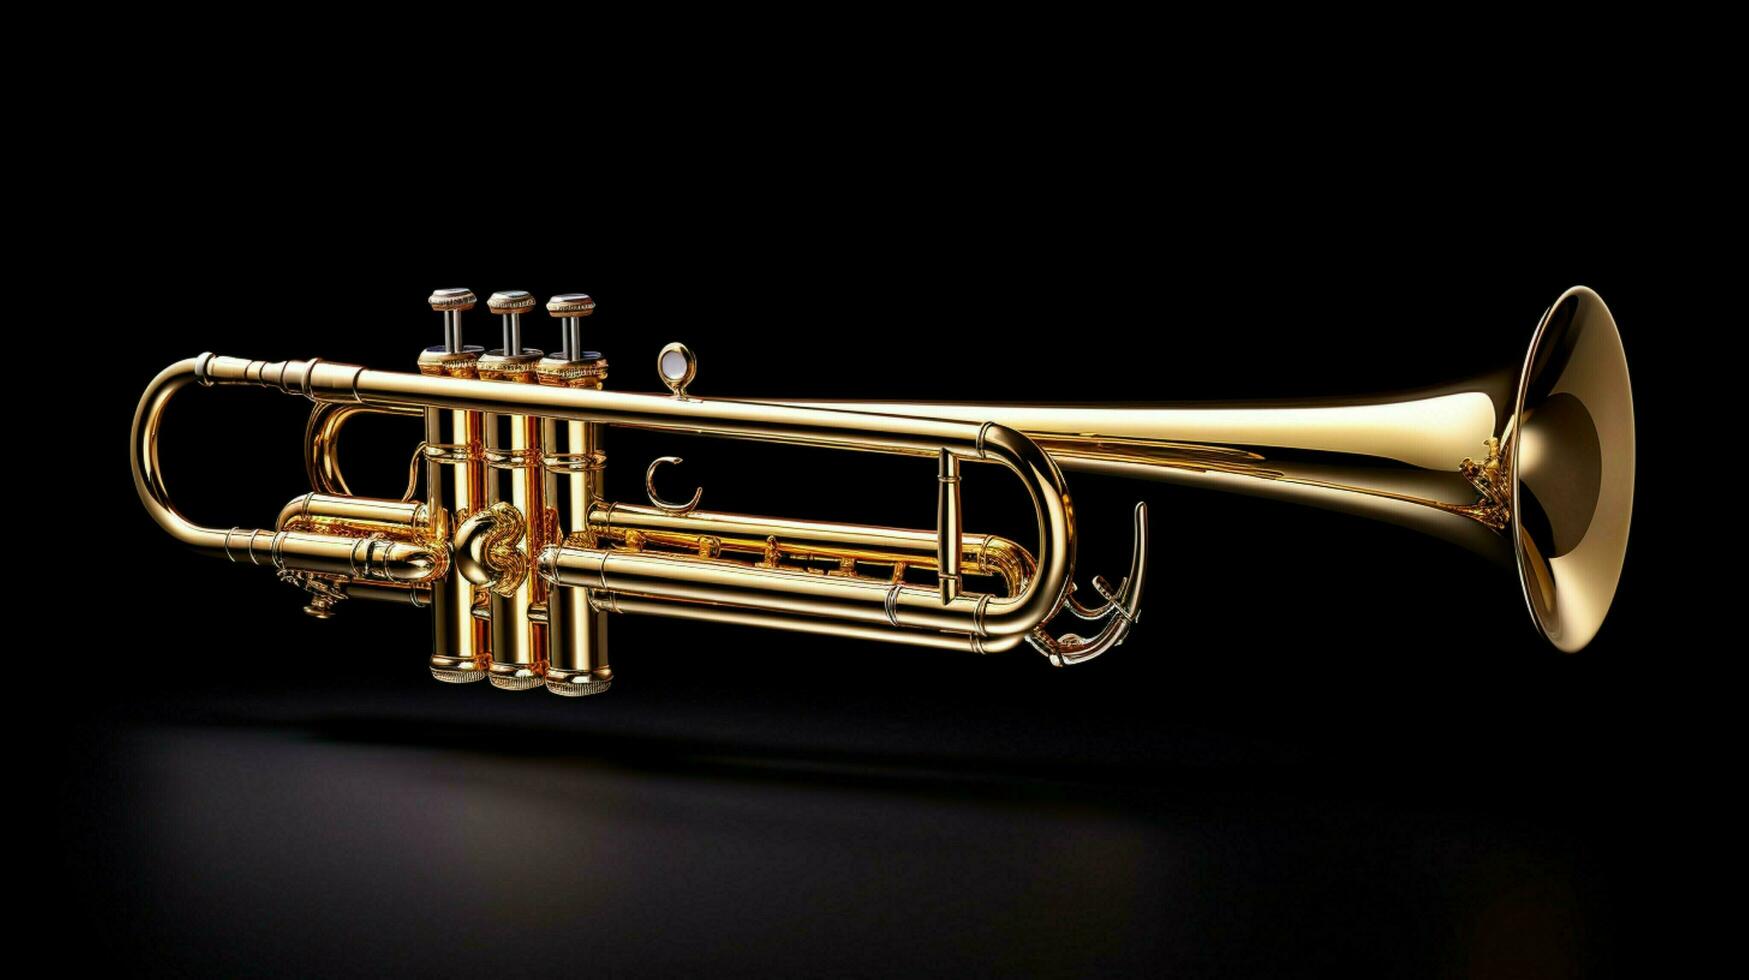 shiny brass trumpet golden style instrument photo